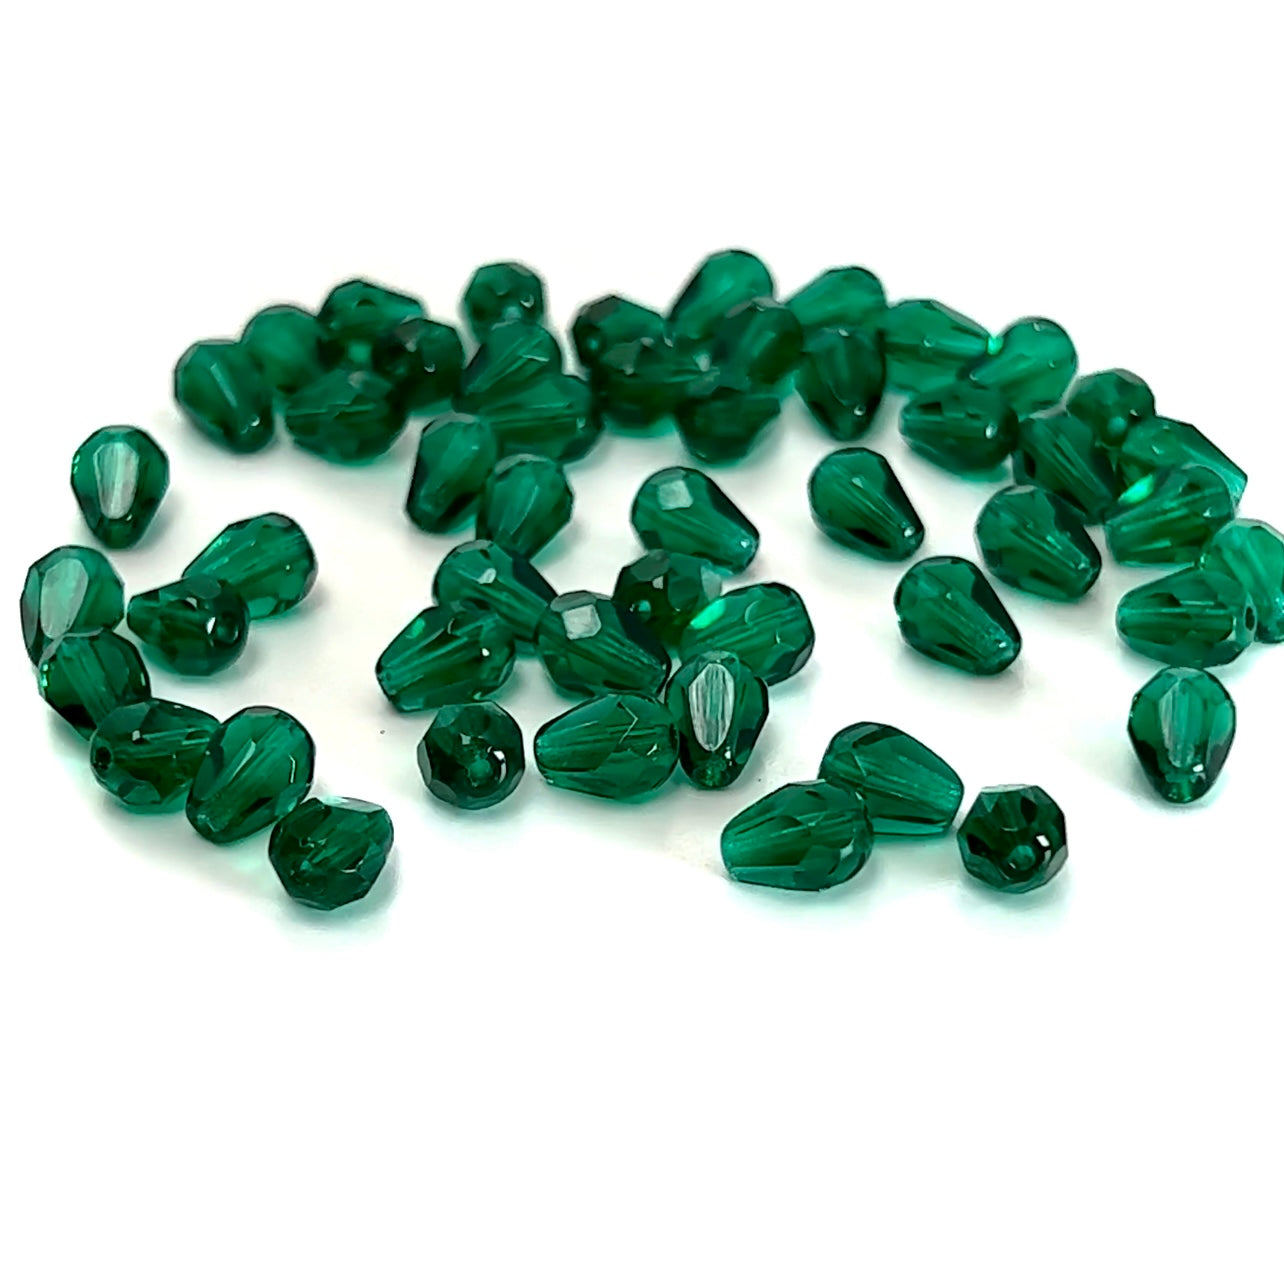 Czech Glass Pear Shaped Fire Polished Beads 8x6mm Emerald green Tear Drops, 50 pieces, J038